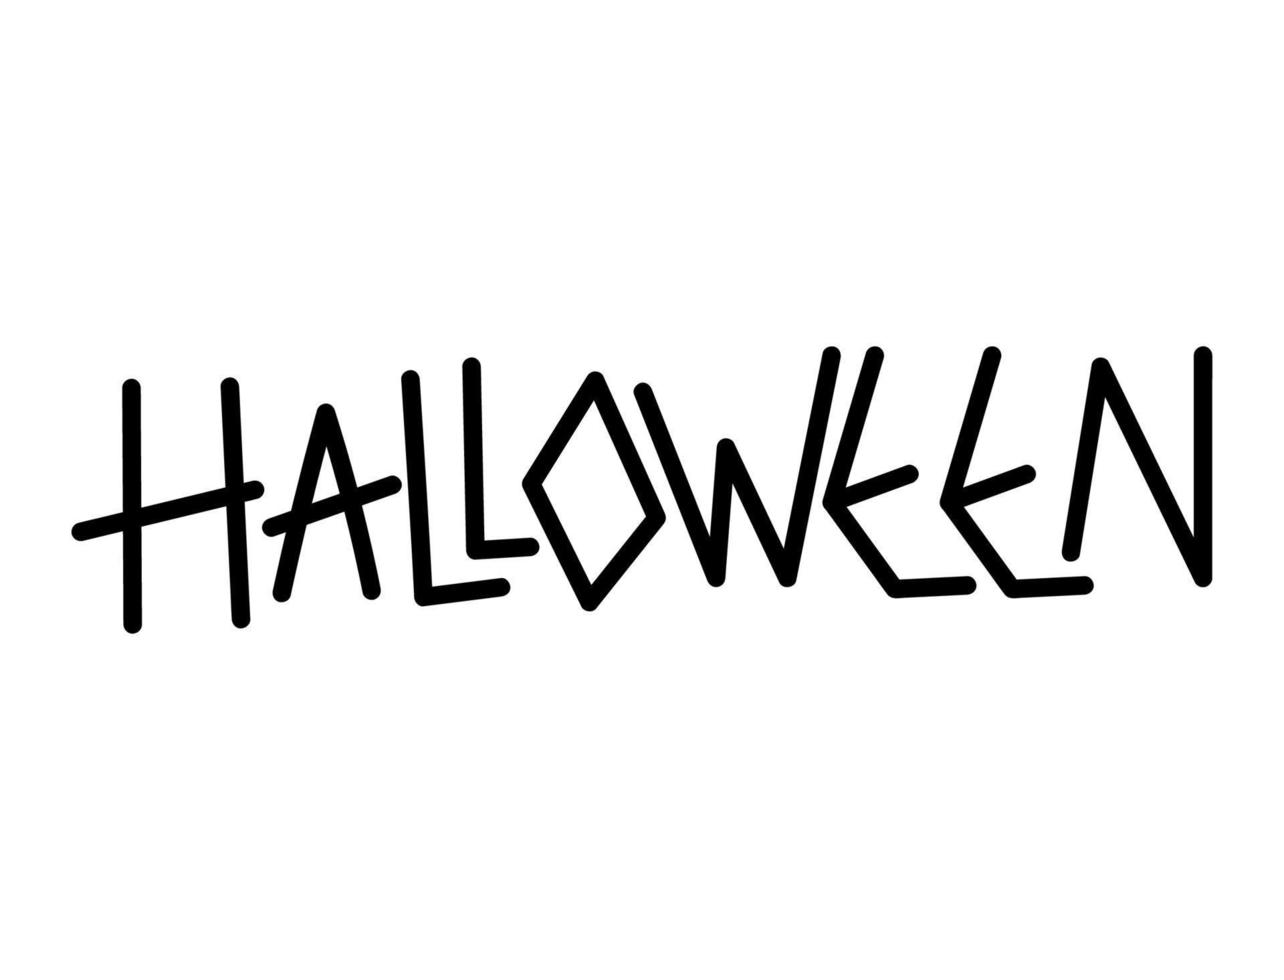 nero Halloween lettering vettore